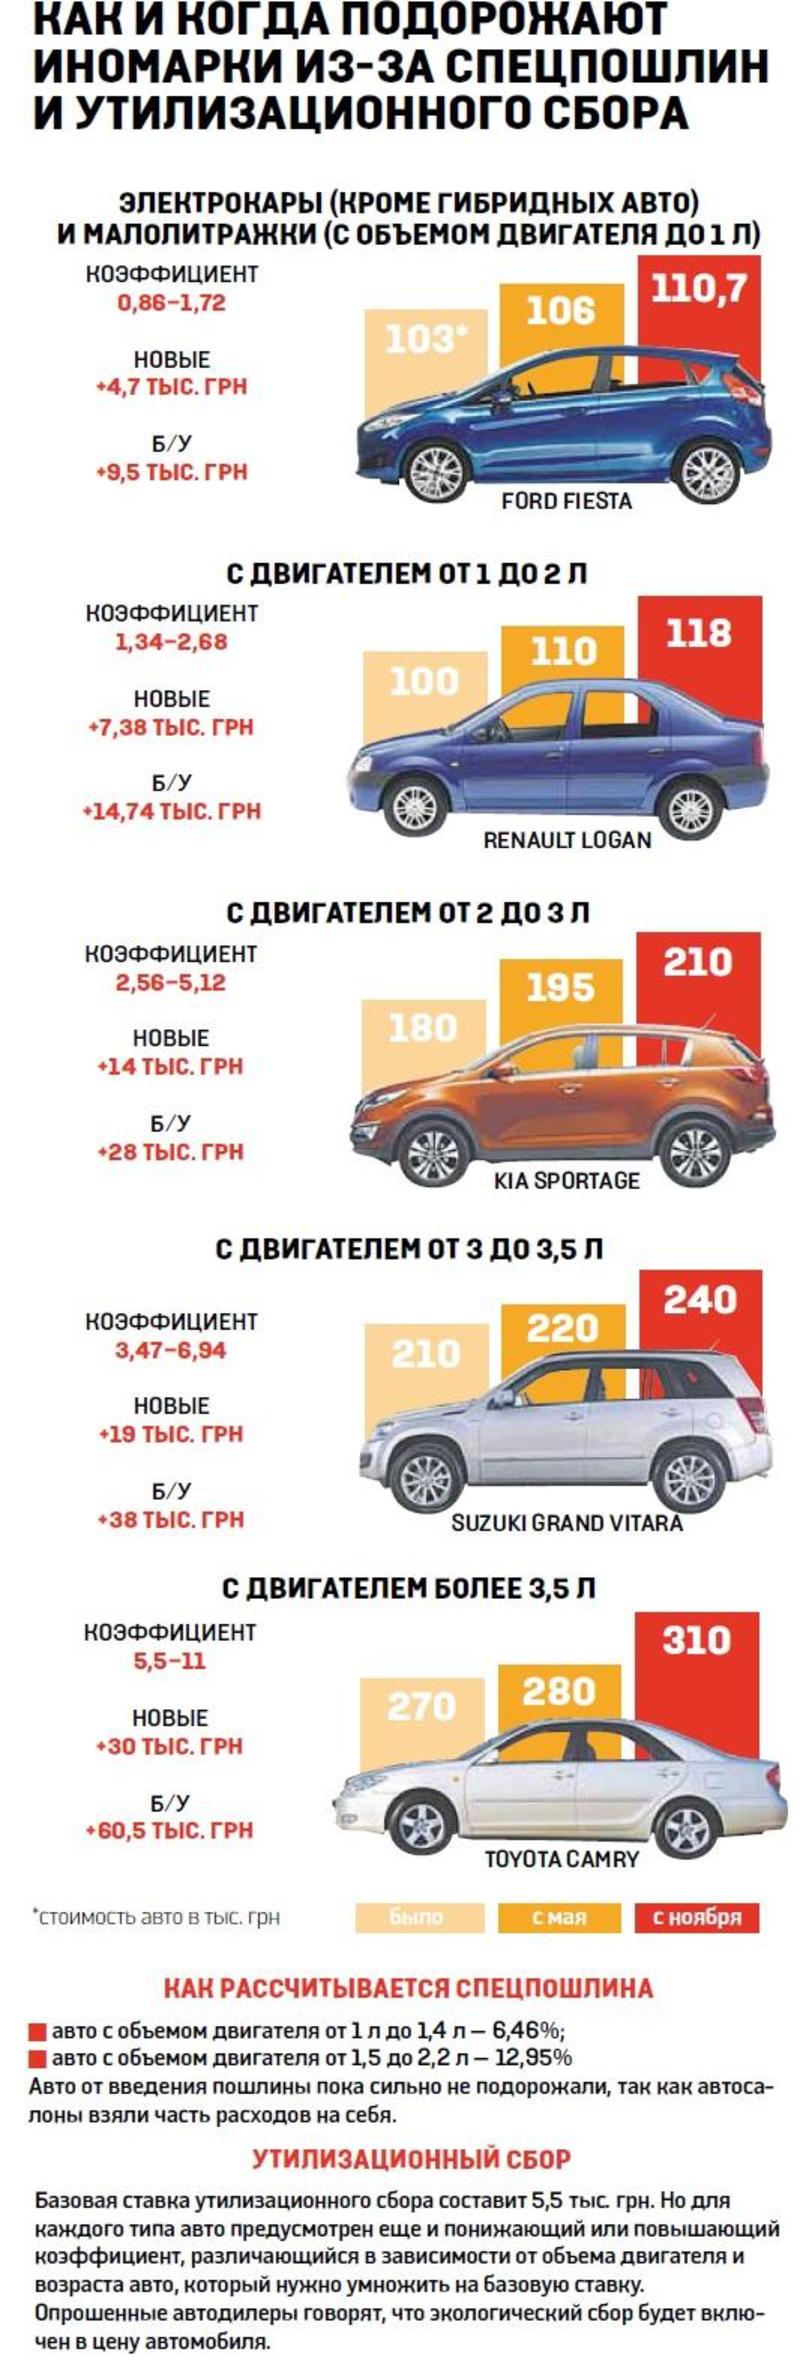 Утилсбор: Киев заплатил 8,7 миллиона за 760 машин / vesti.ua